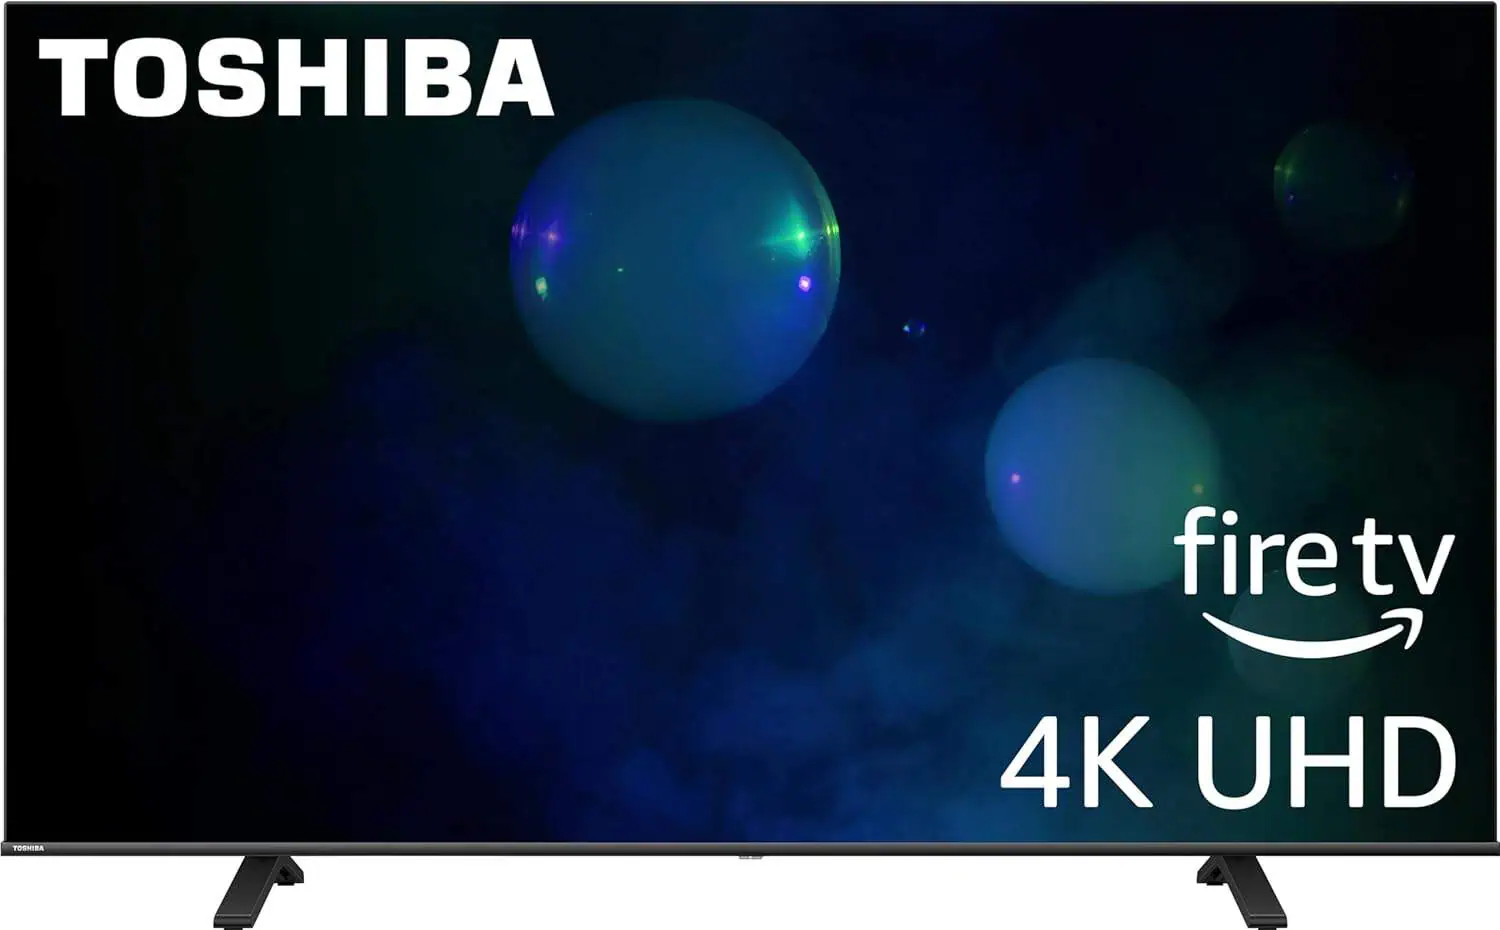 Toshiba 75-inch C350 Fire TV | Amazon